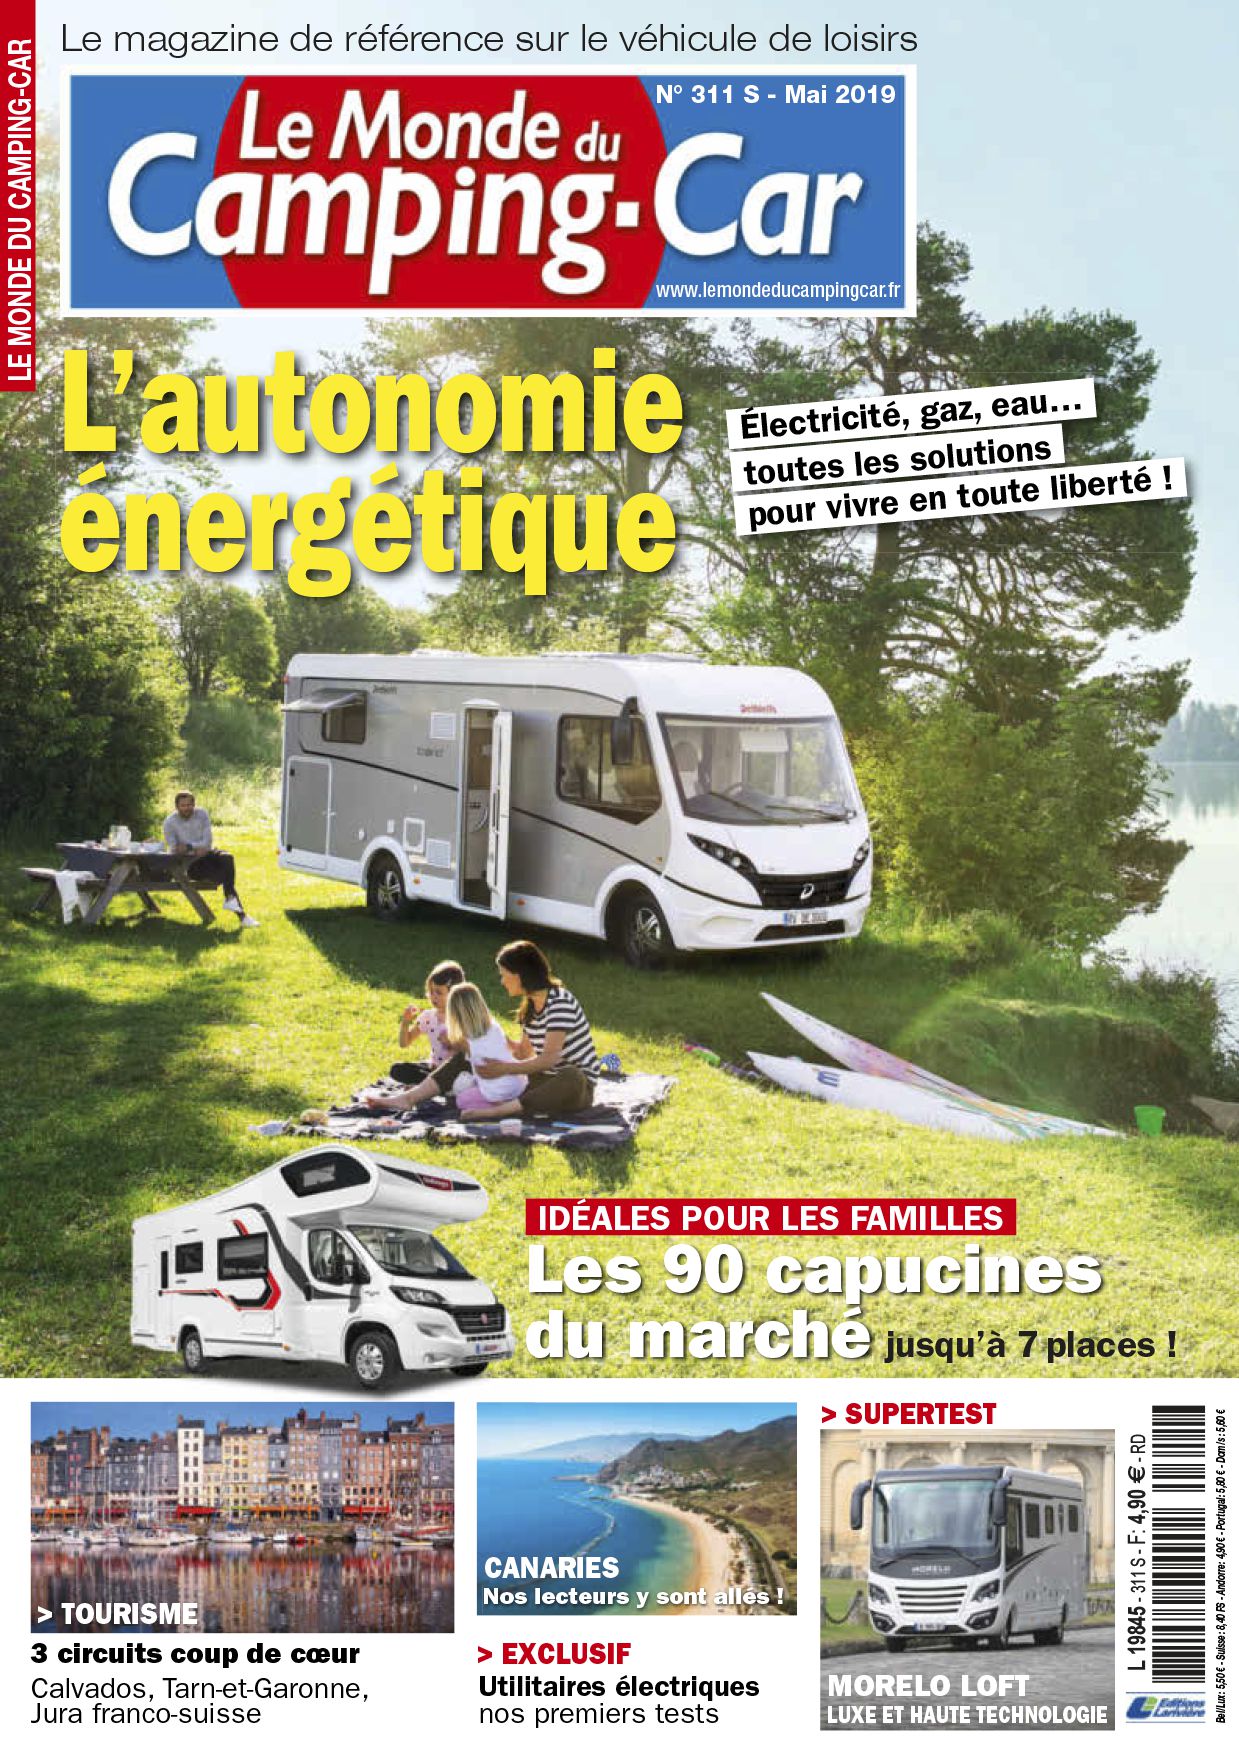 Le Monde du Camping Car n° 311 4.9€